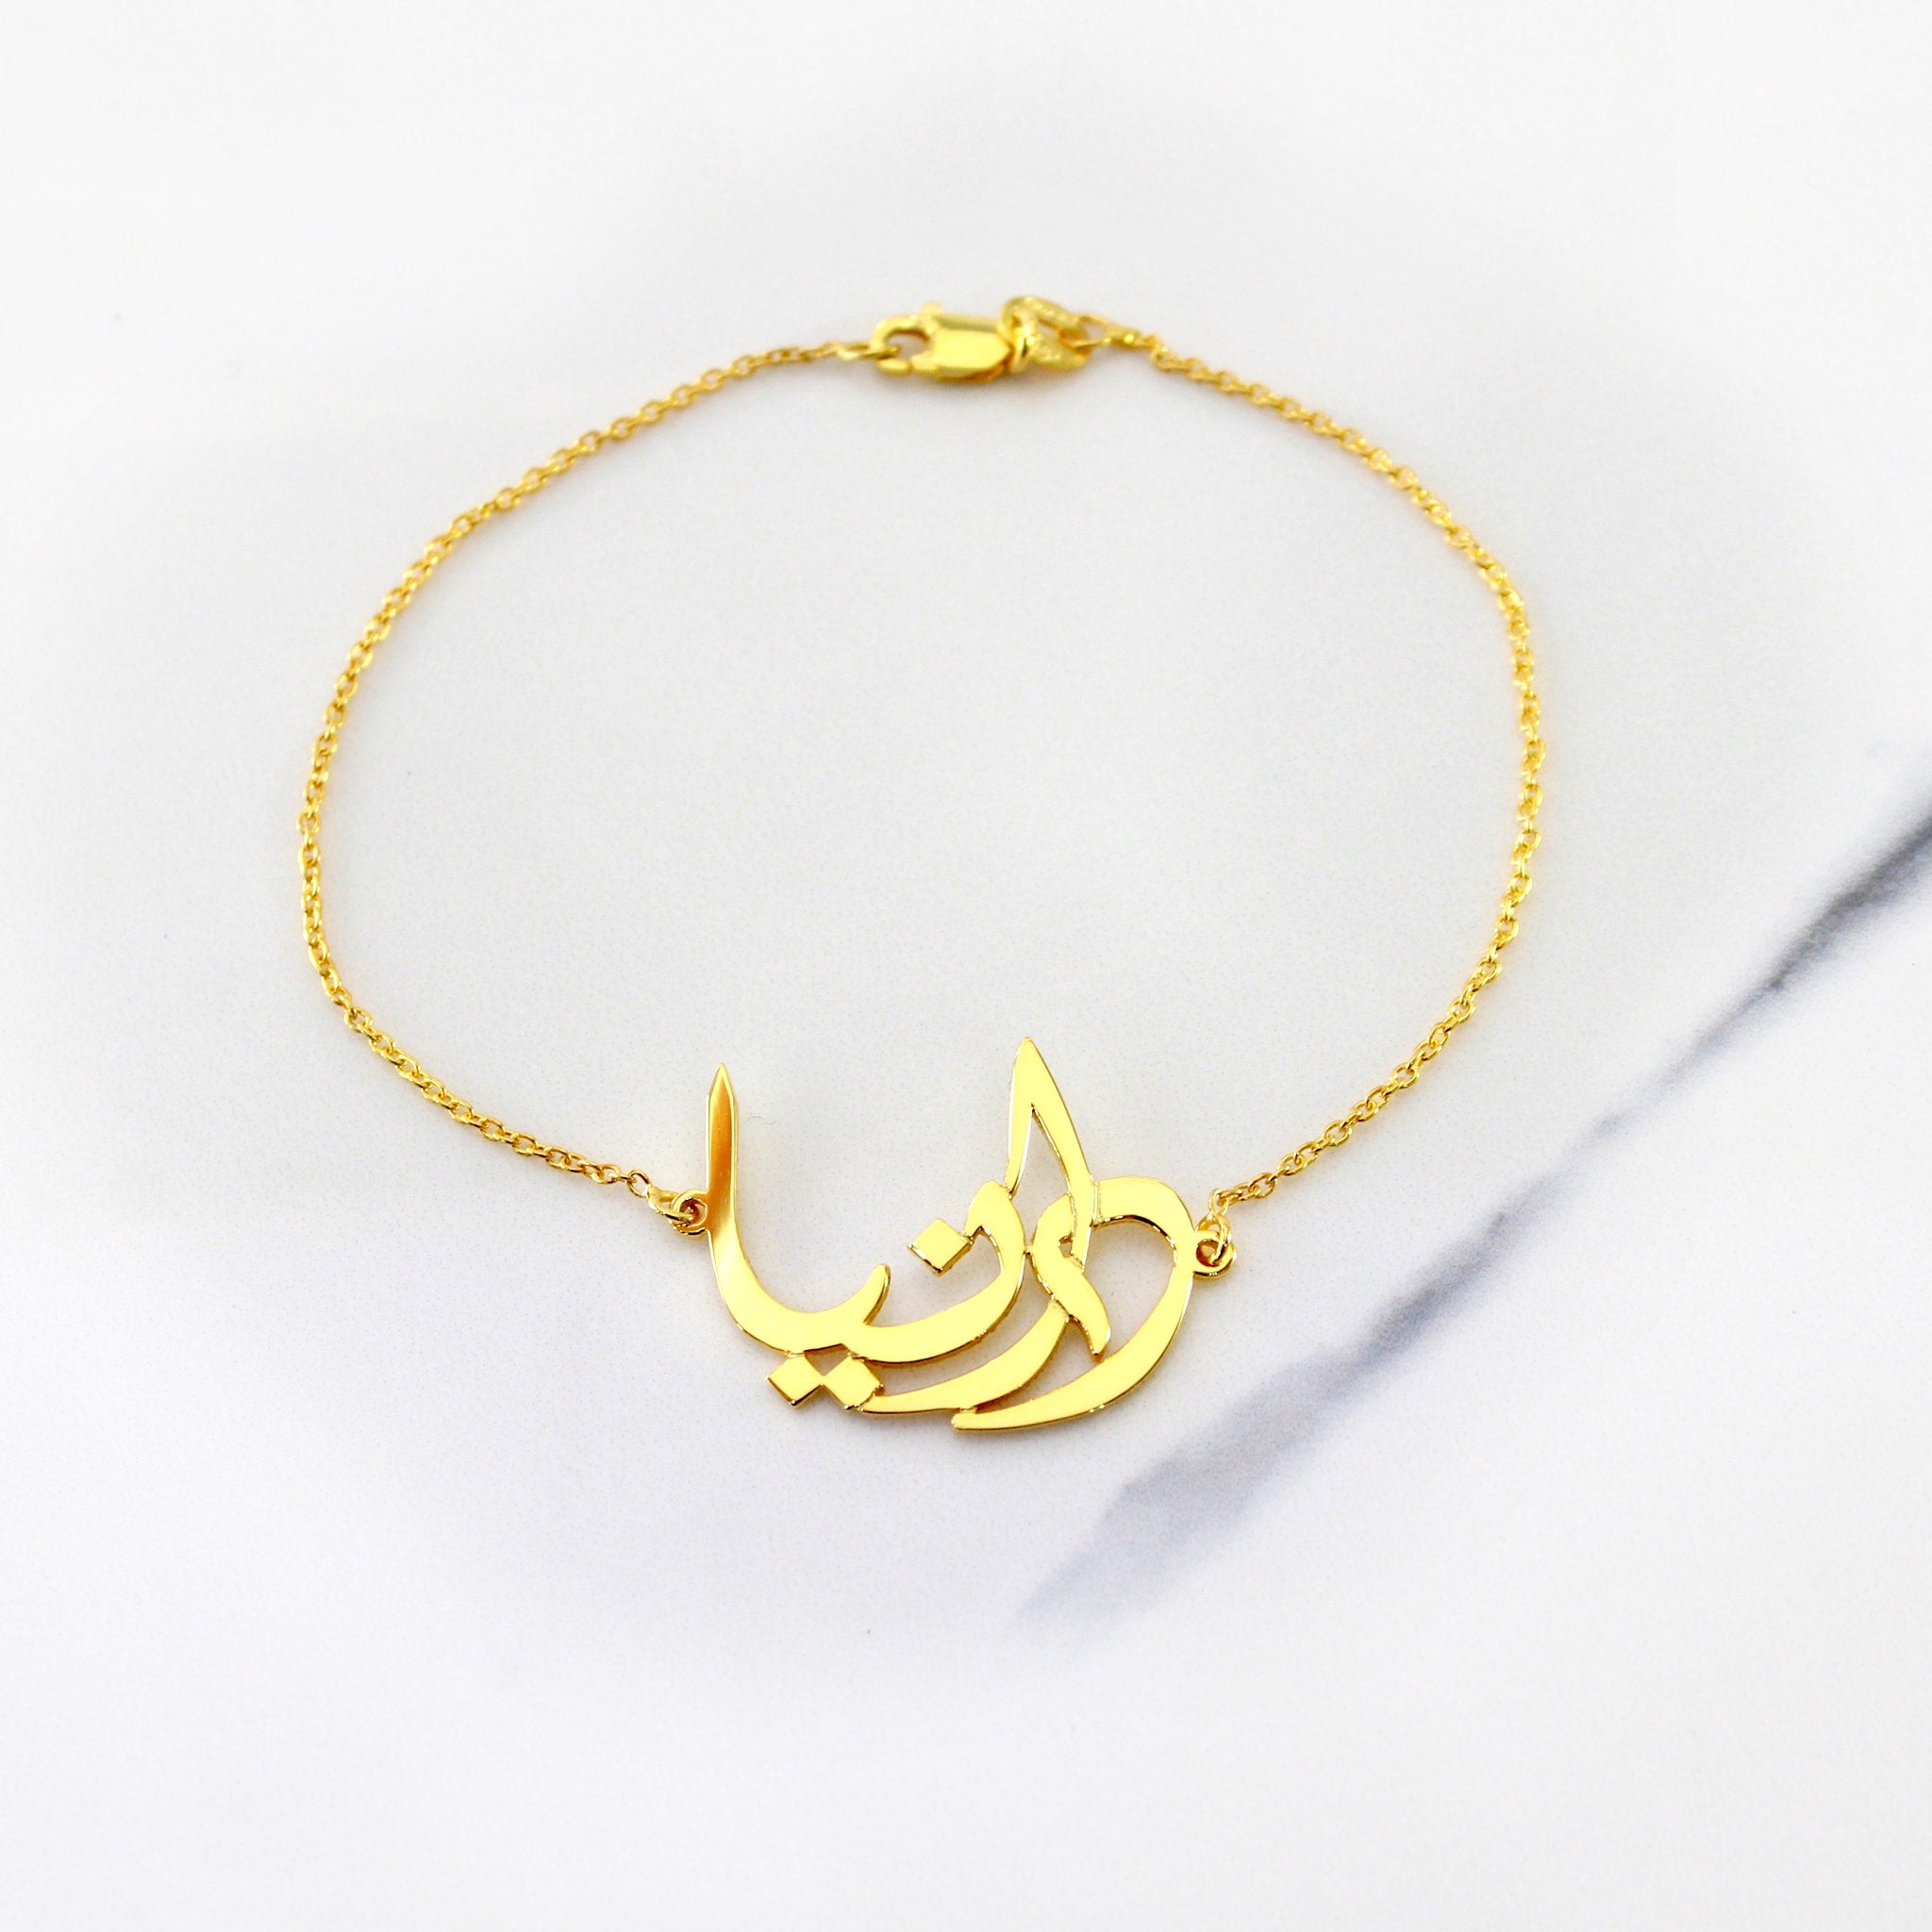 Persian or Arabic Name Bracelet - SCRIPT Calligraphy